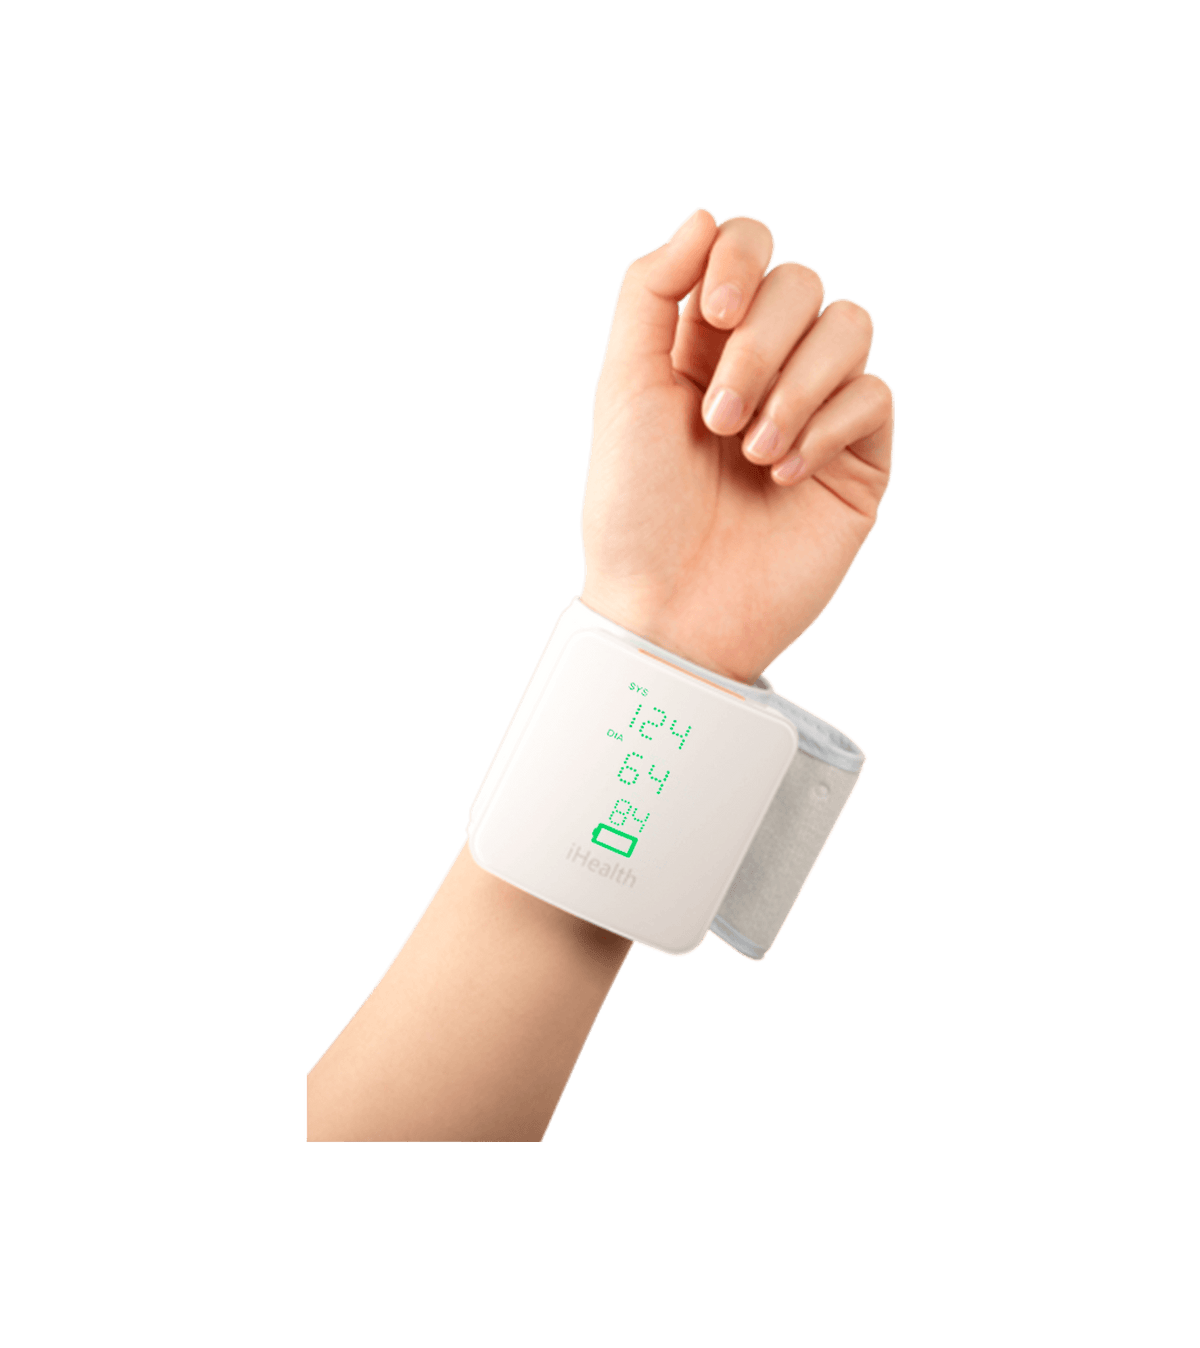 Automatic blood pressure monitor - BP7 - iHealth - wrist